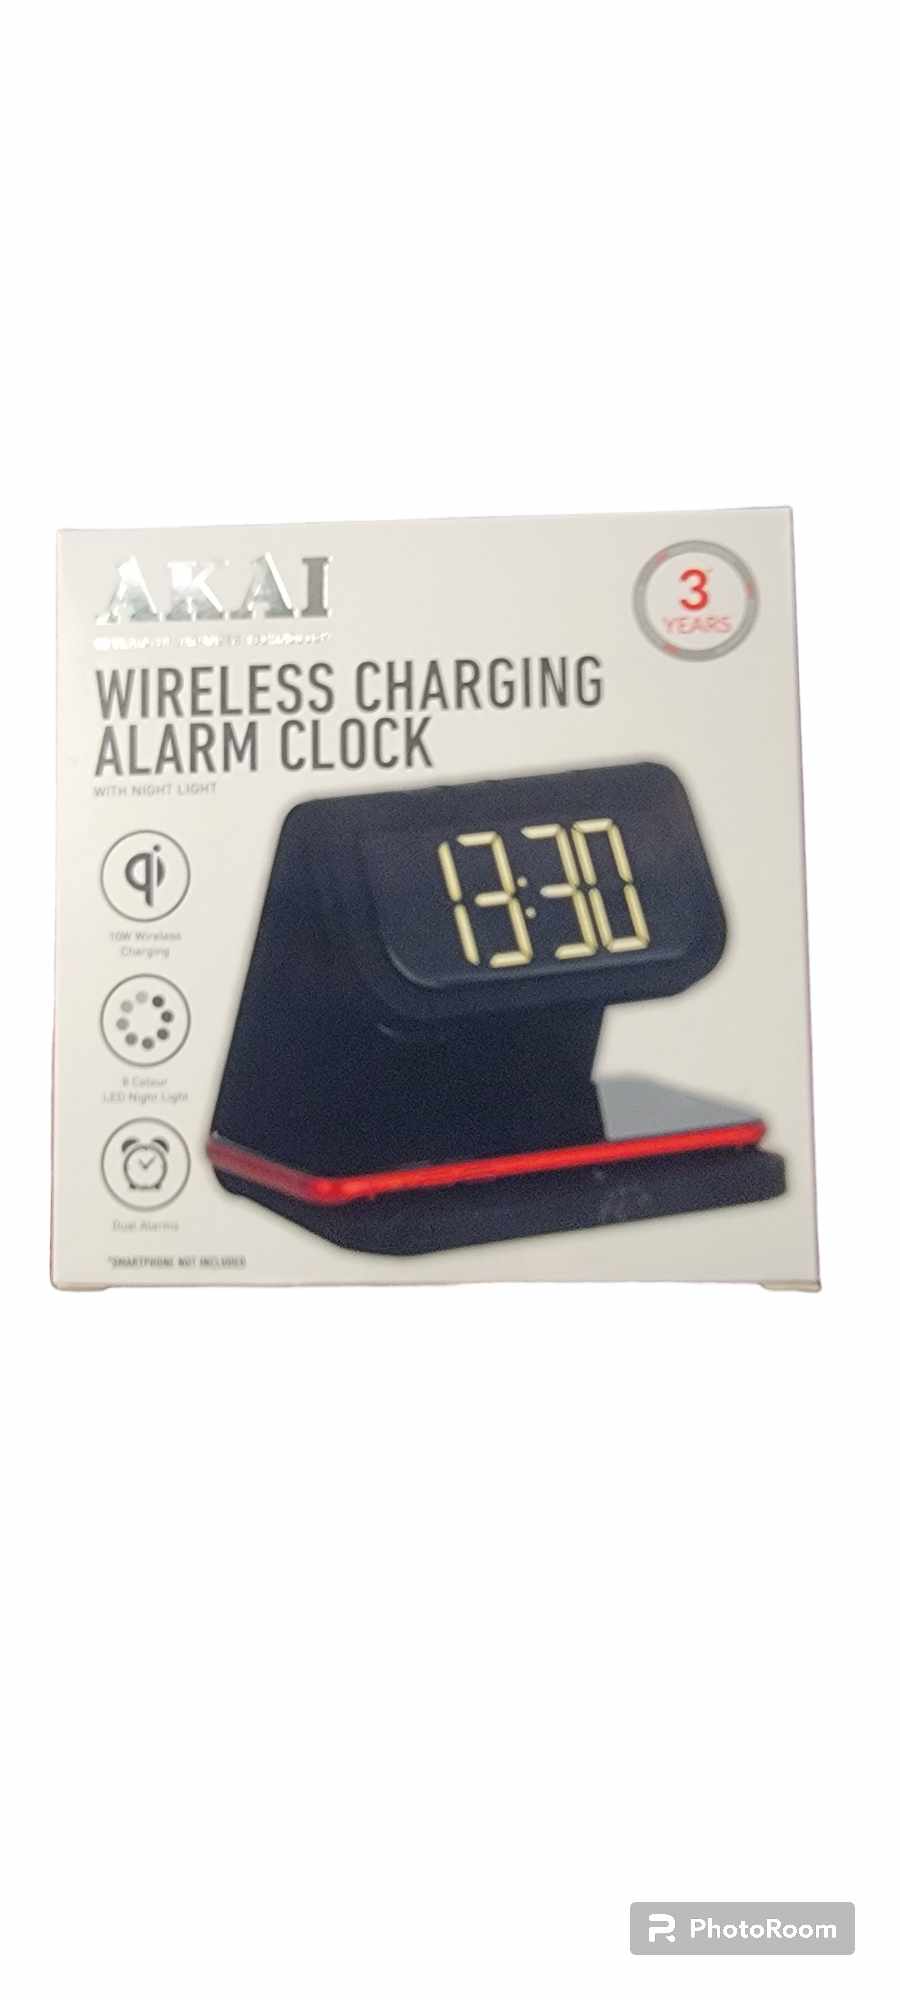 Akai Wireless Charging Alarm Clock Boxed